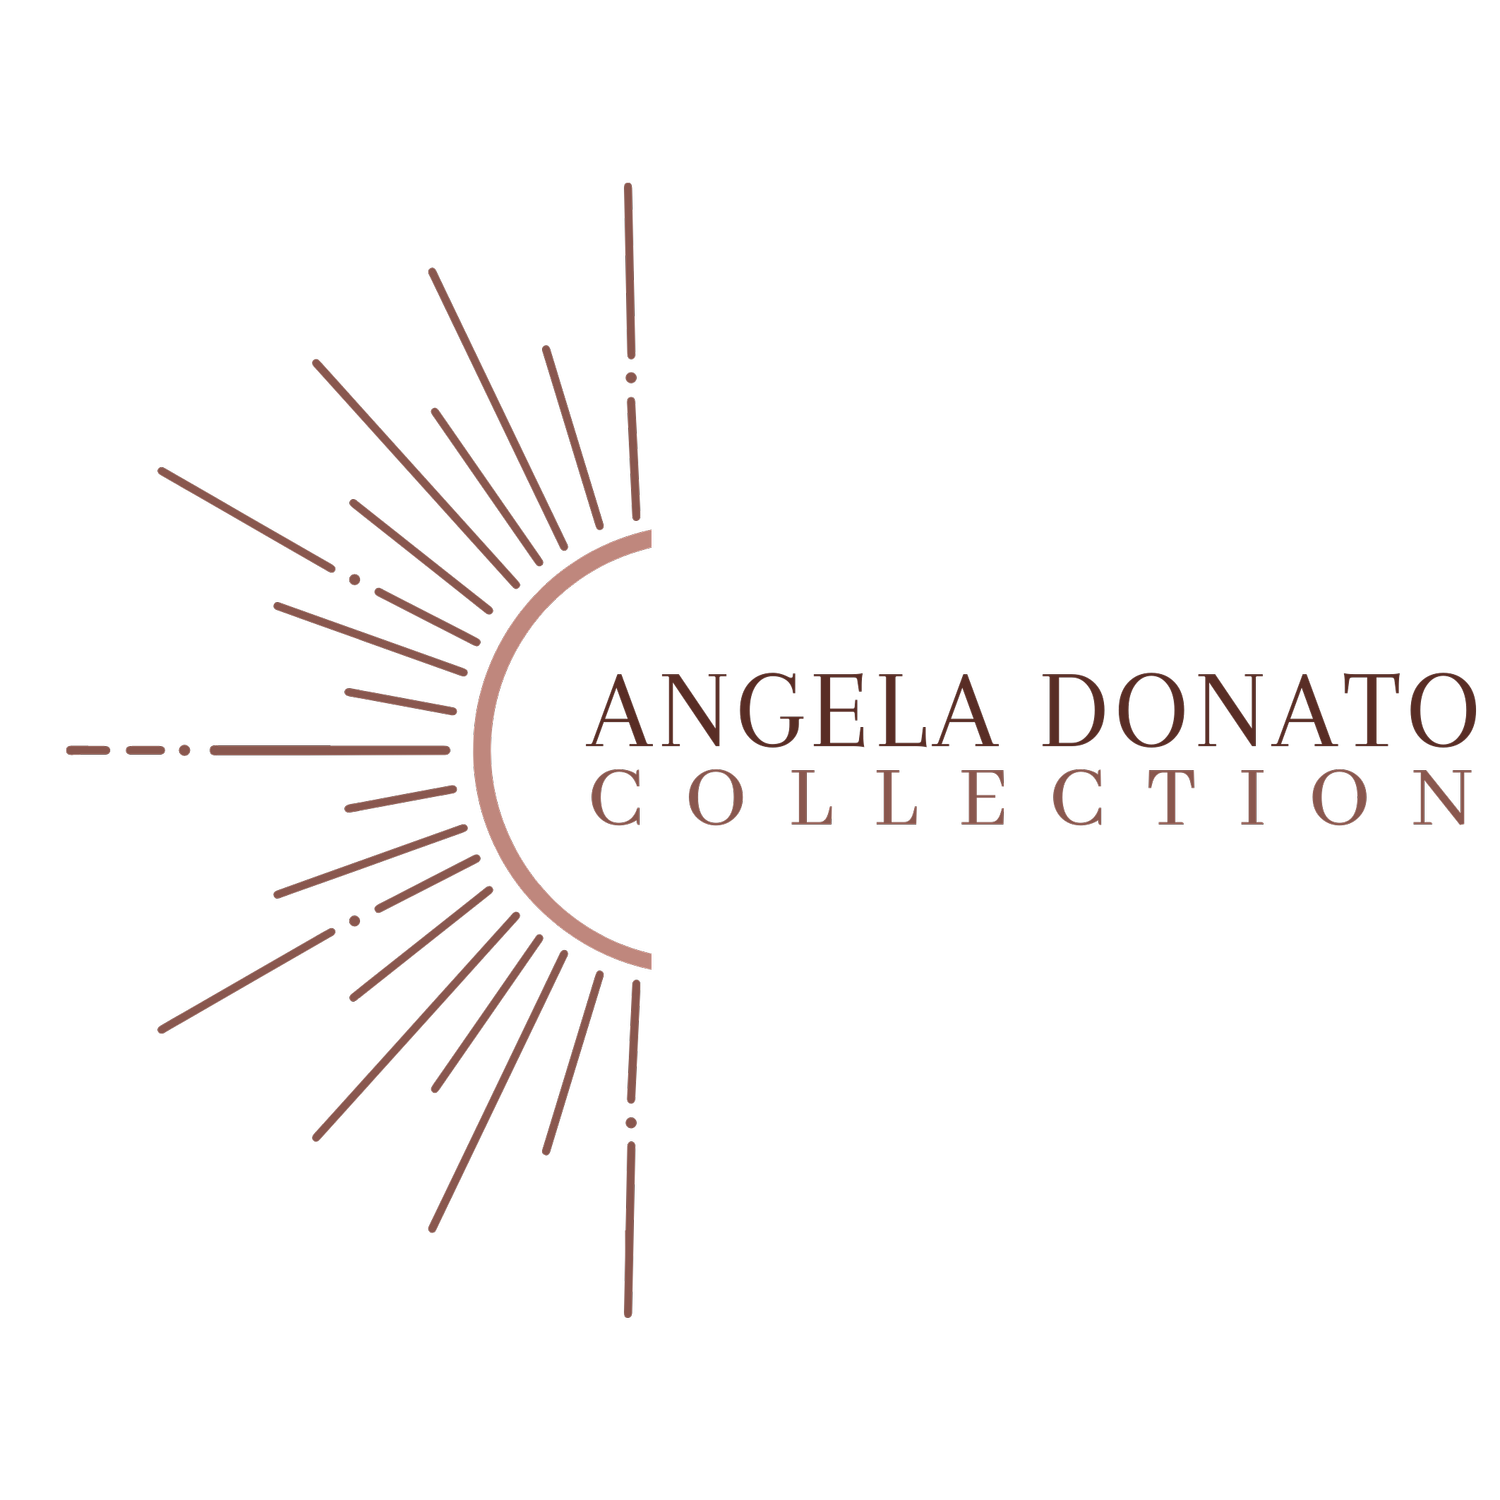 Angela Donato Collection